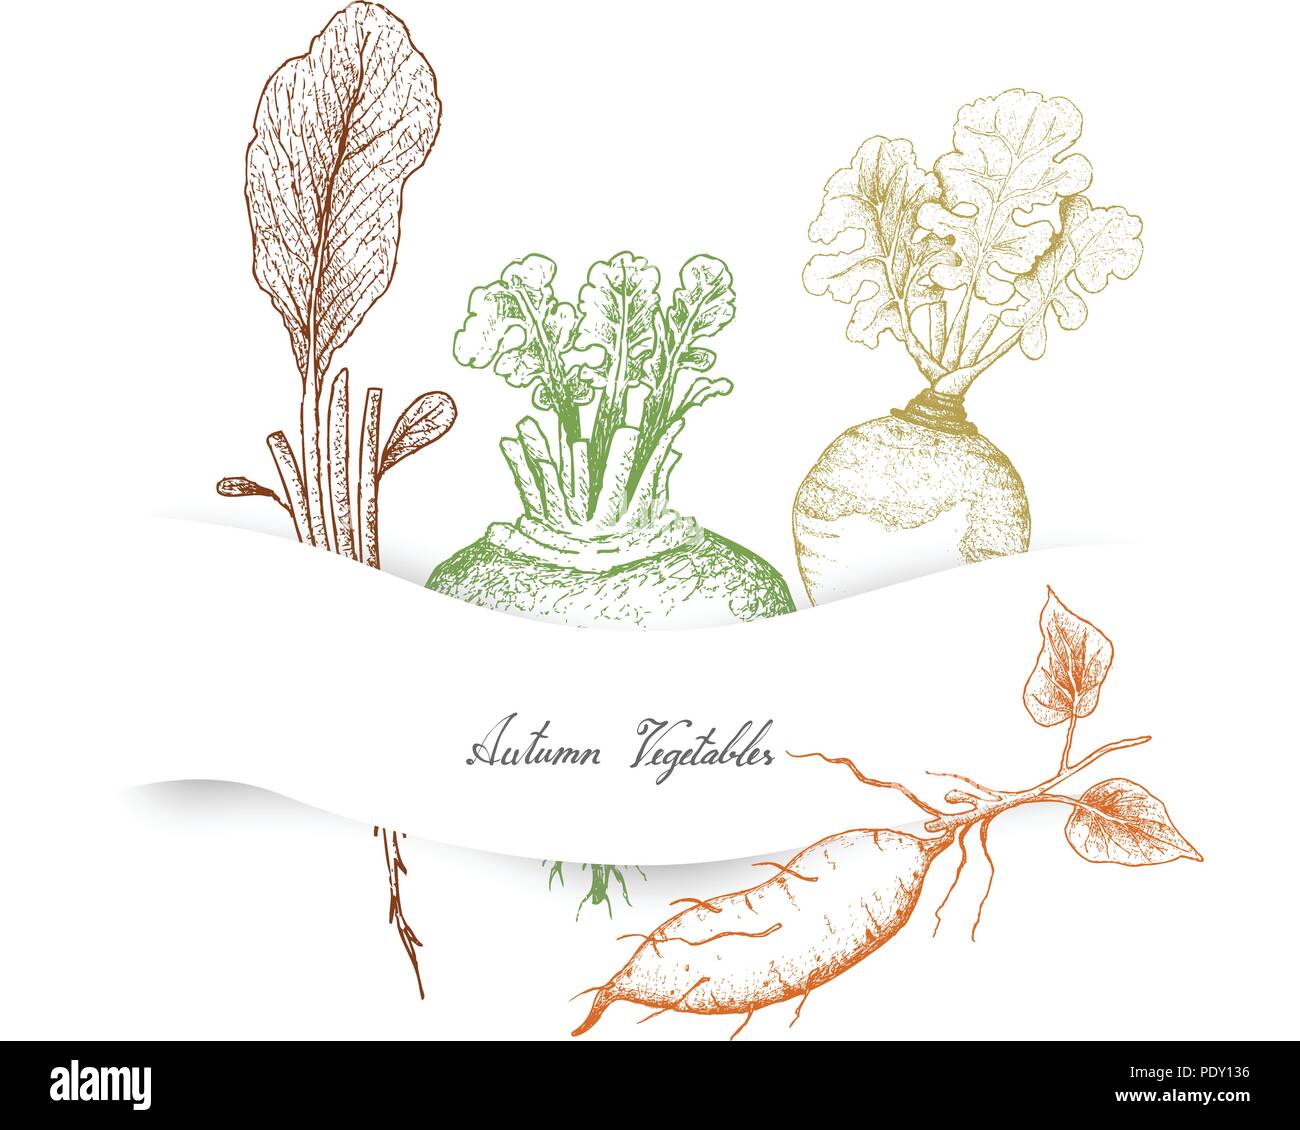 Autumn Vegetables, Illustration Hand Drawn Sketch of Radish, Rutabaga or Brassica Napus, Sweet Potato or Kumara and Turnip or Brassica Rapa. Stock Vector